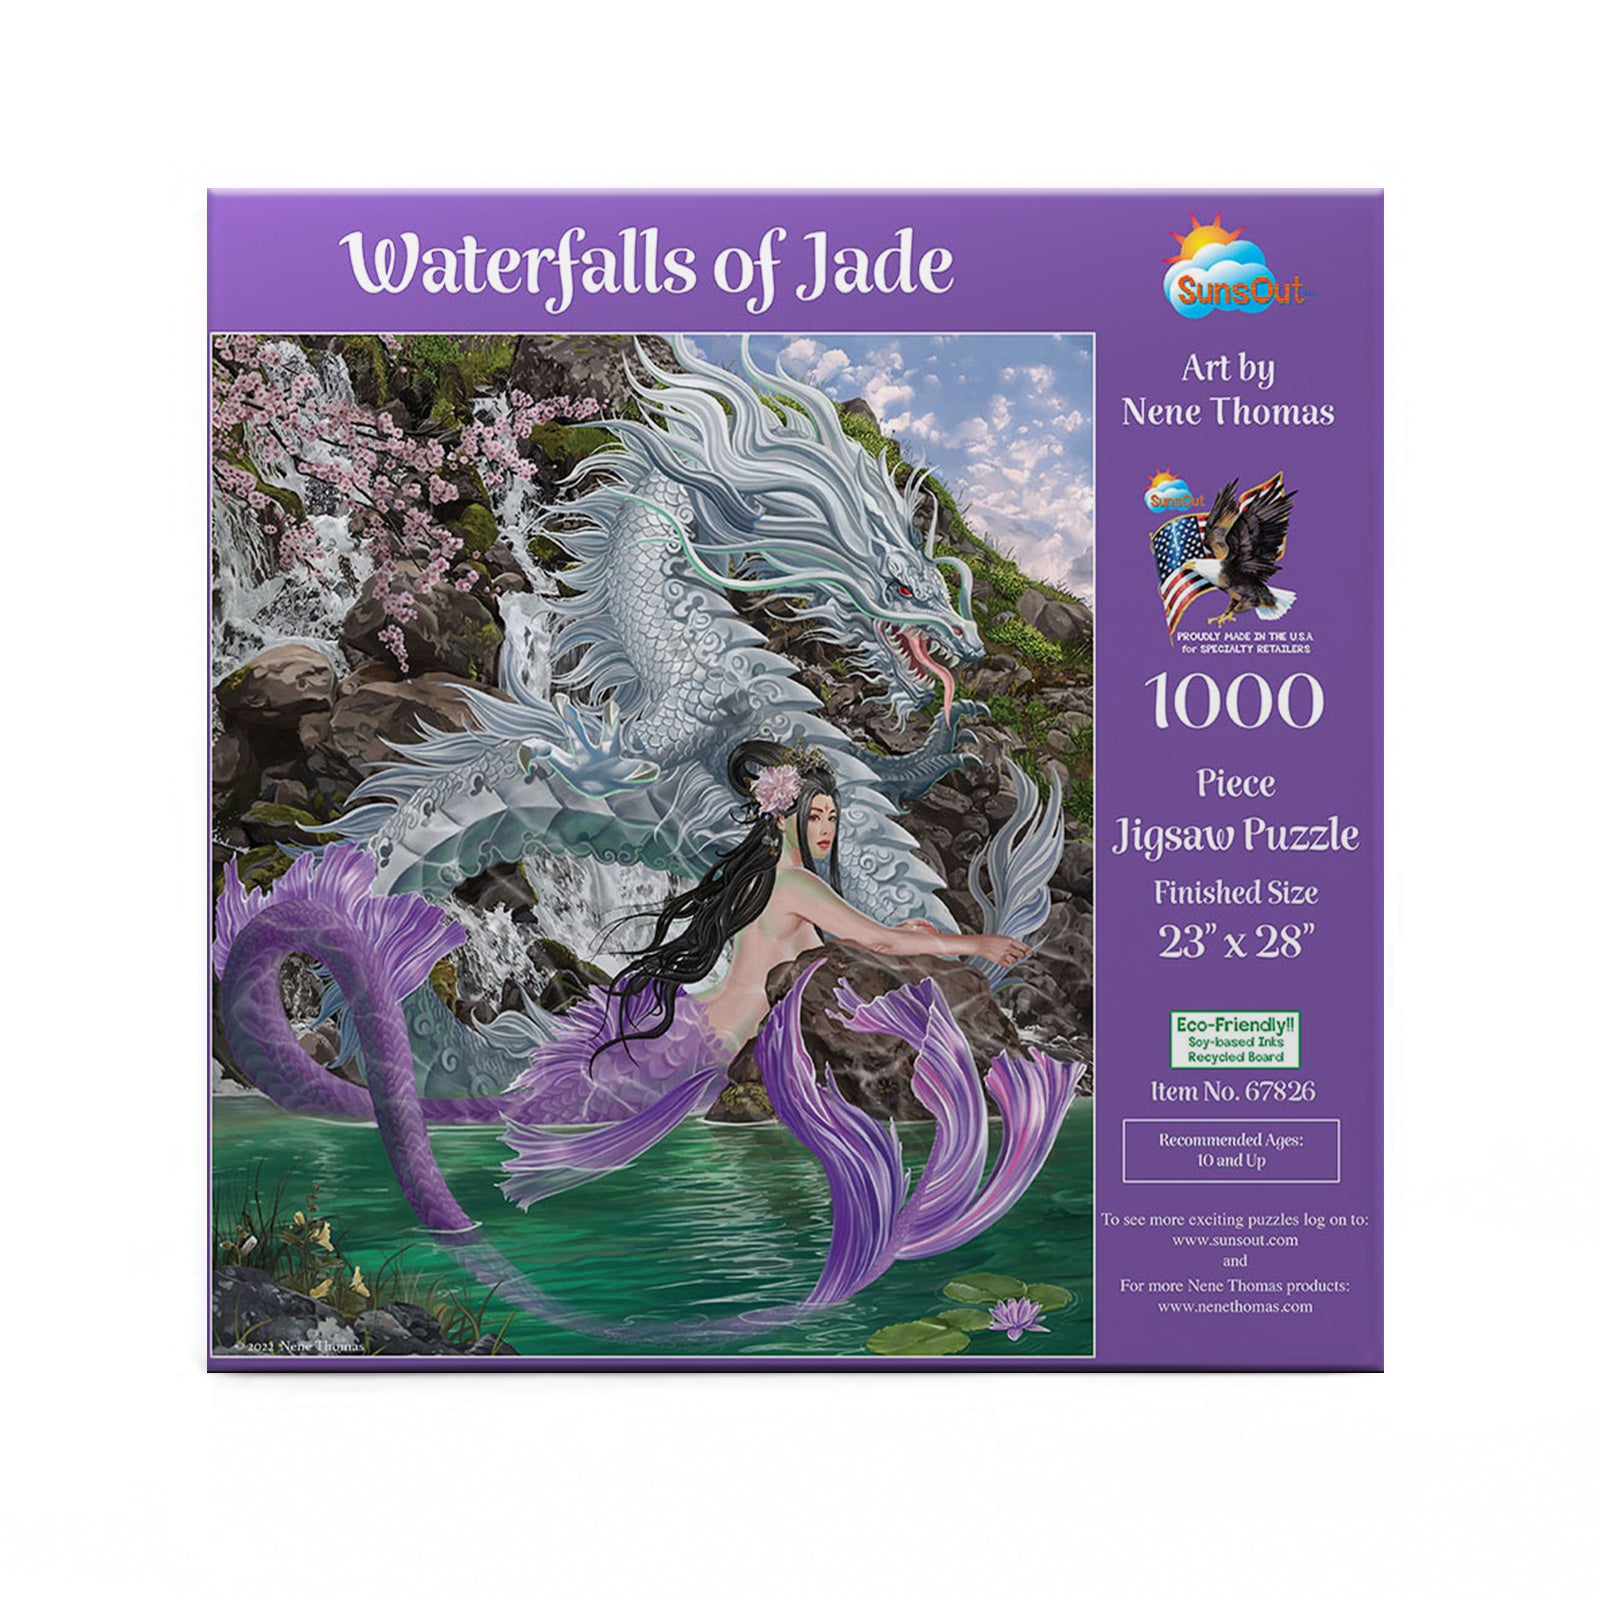 Waterfalls of Jade by Nene Thomas 1000 Piece Jigsaw Puzzle